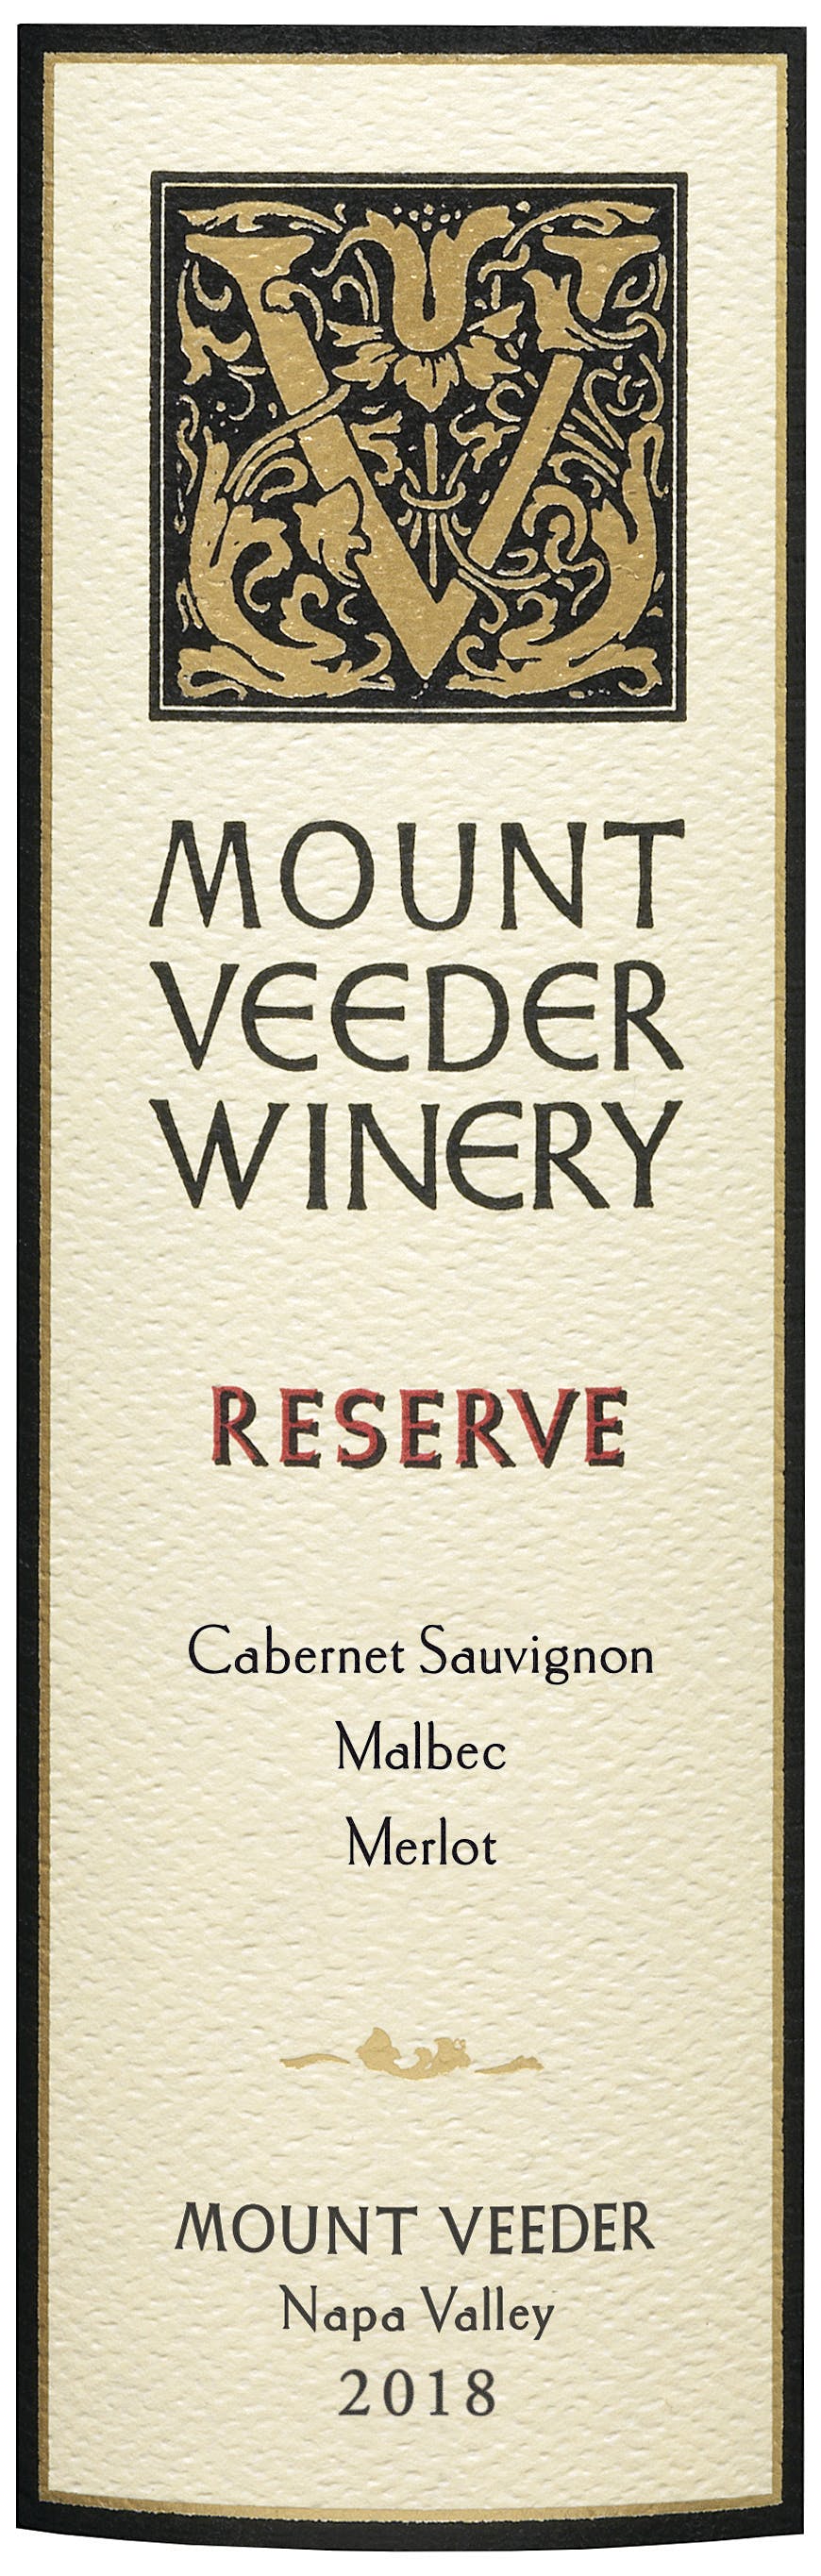 Label for Mount Veeder Winery